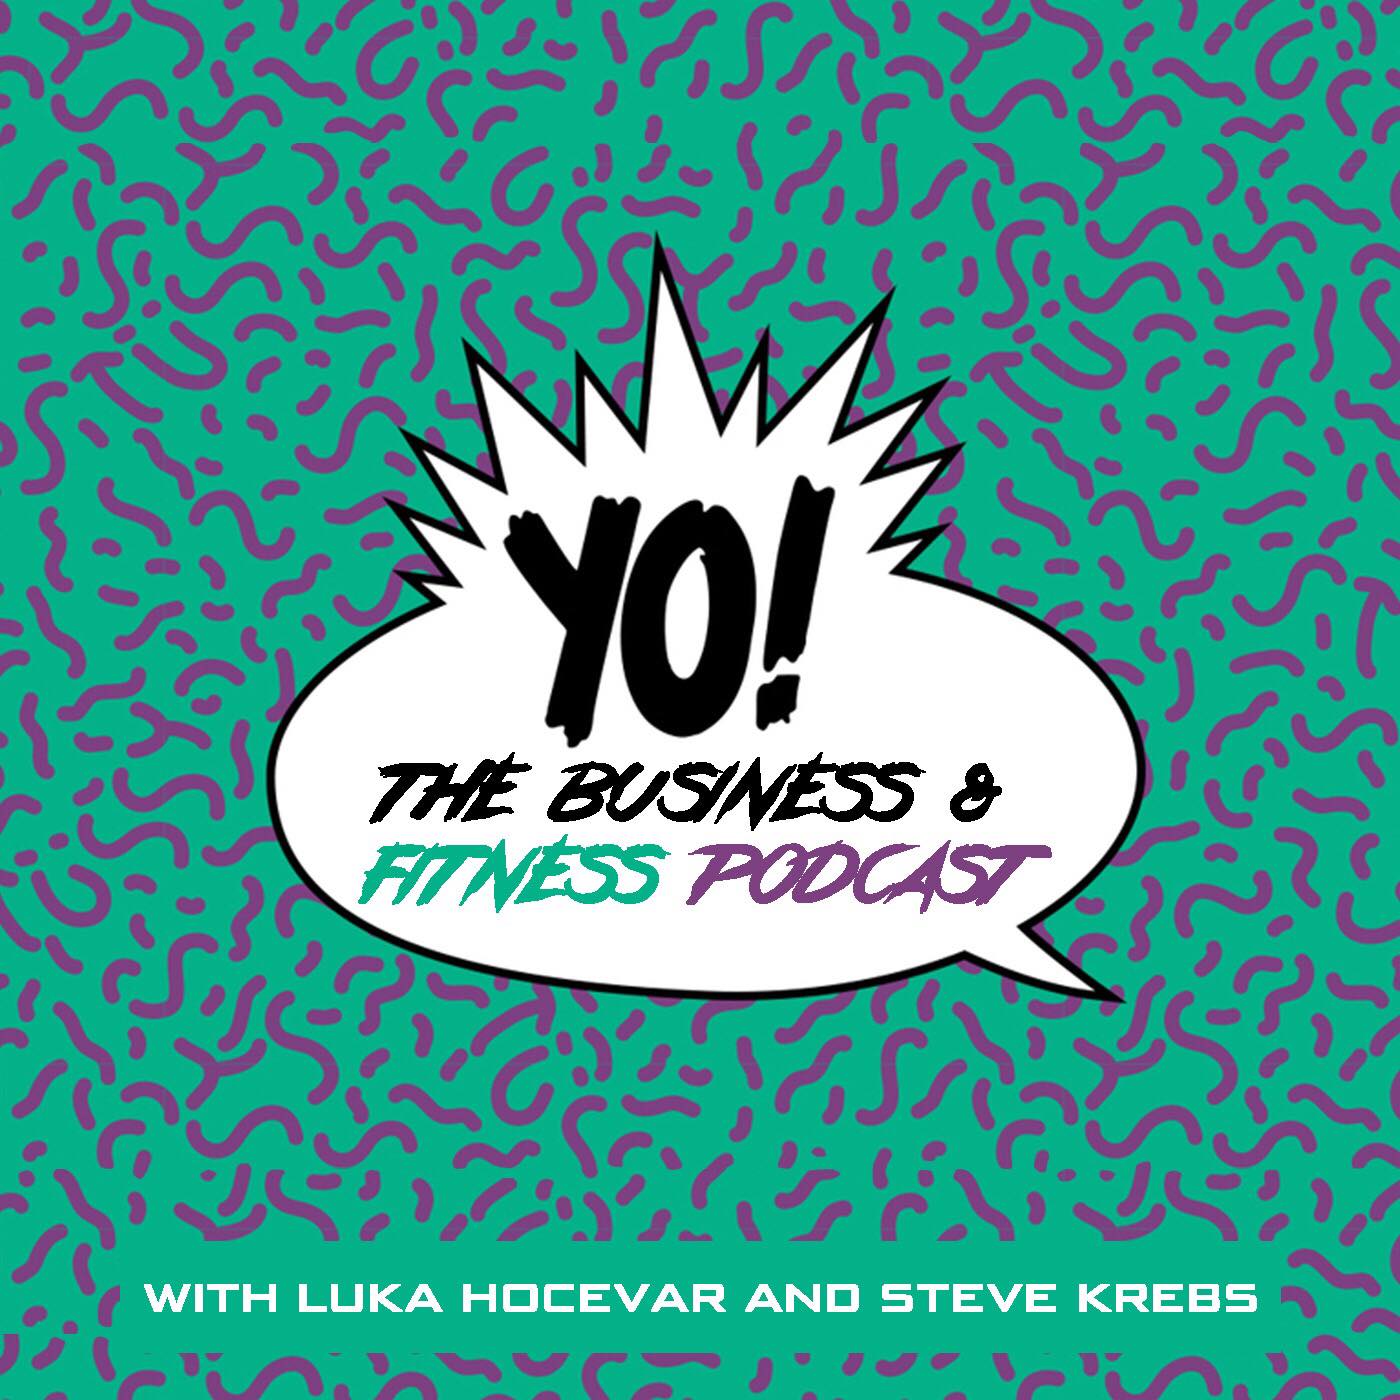 YO! The Business & Fitness Podcast with Luka Hocevar and Steve Krebs